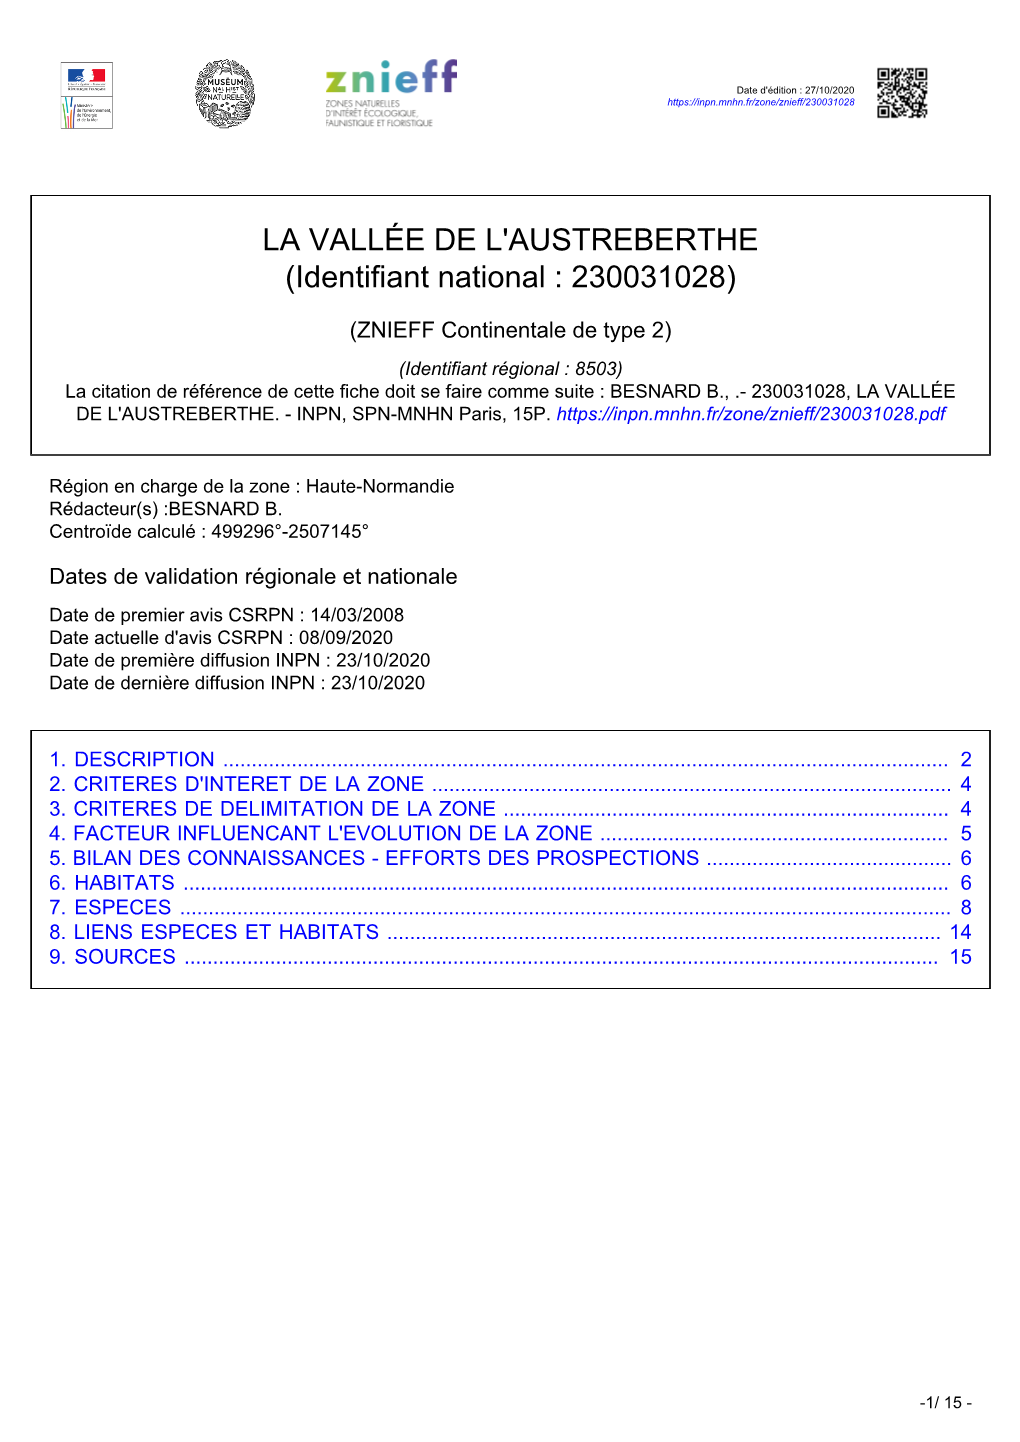 LA VALLÉE DE L'austreberthe (Identifiant National : 230031028)